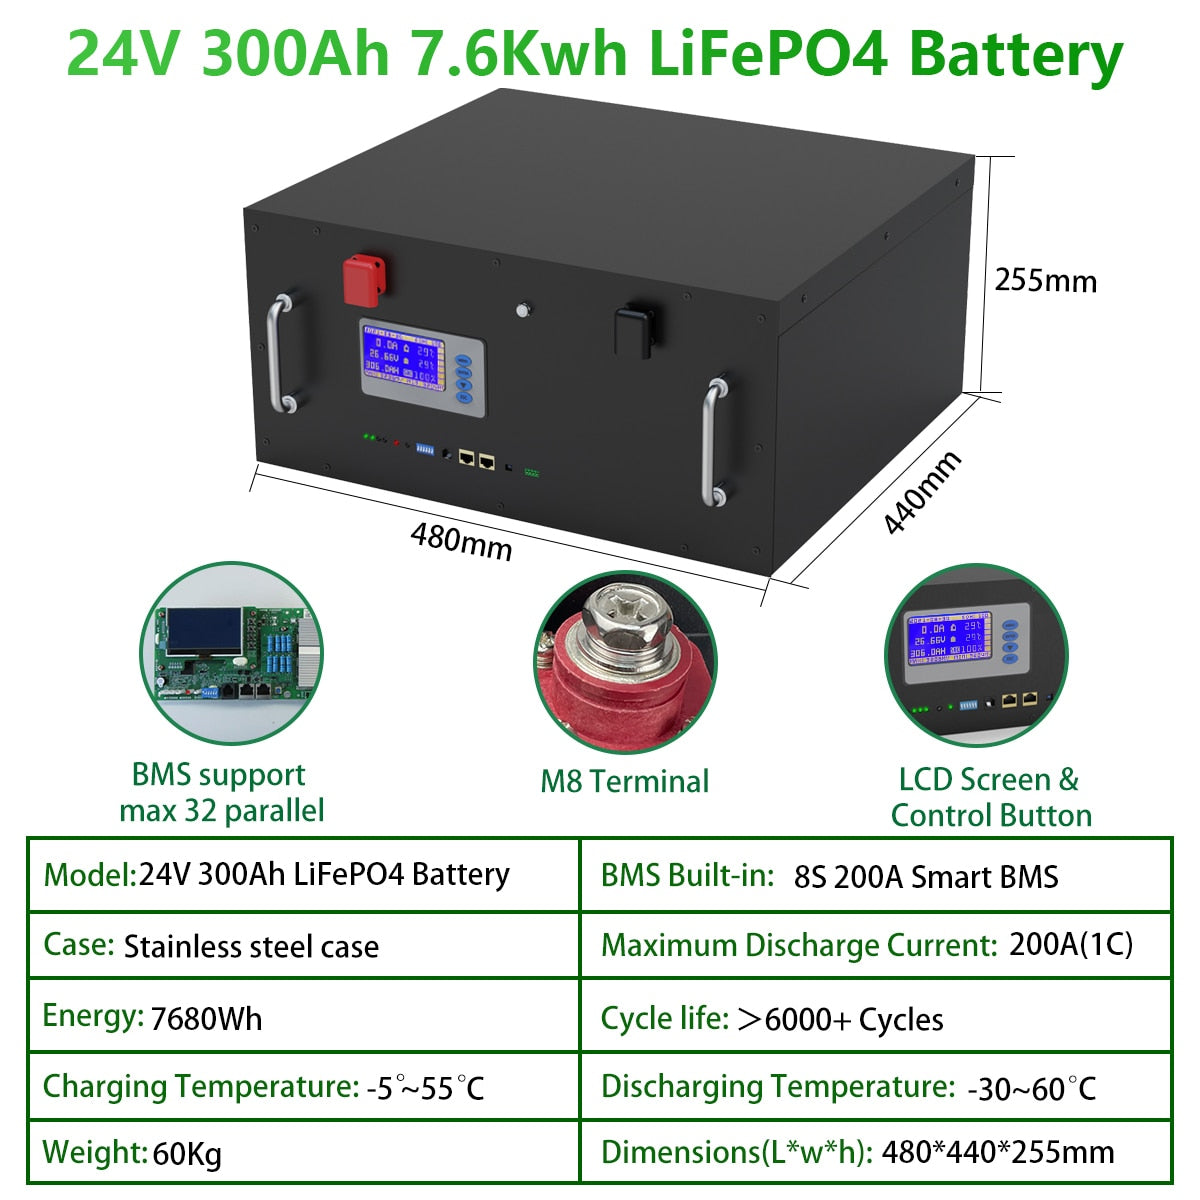 Bateria LiFePO4 24V 240Ah 300Ah 200Ah 6144Wh - Embutida 8S 25,6V 200A BMS CAN RS485 6000+ Ciclos Garantia de 10 anos UE SEM IMPOSTOS